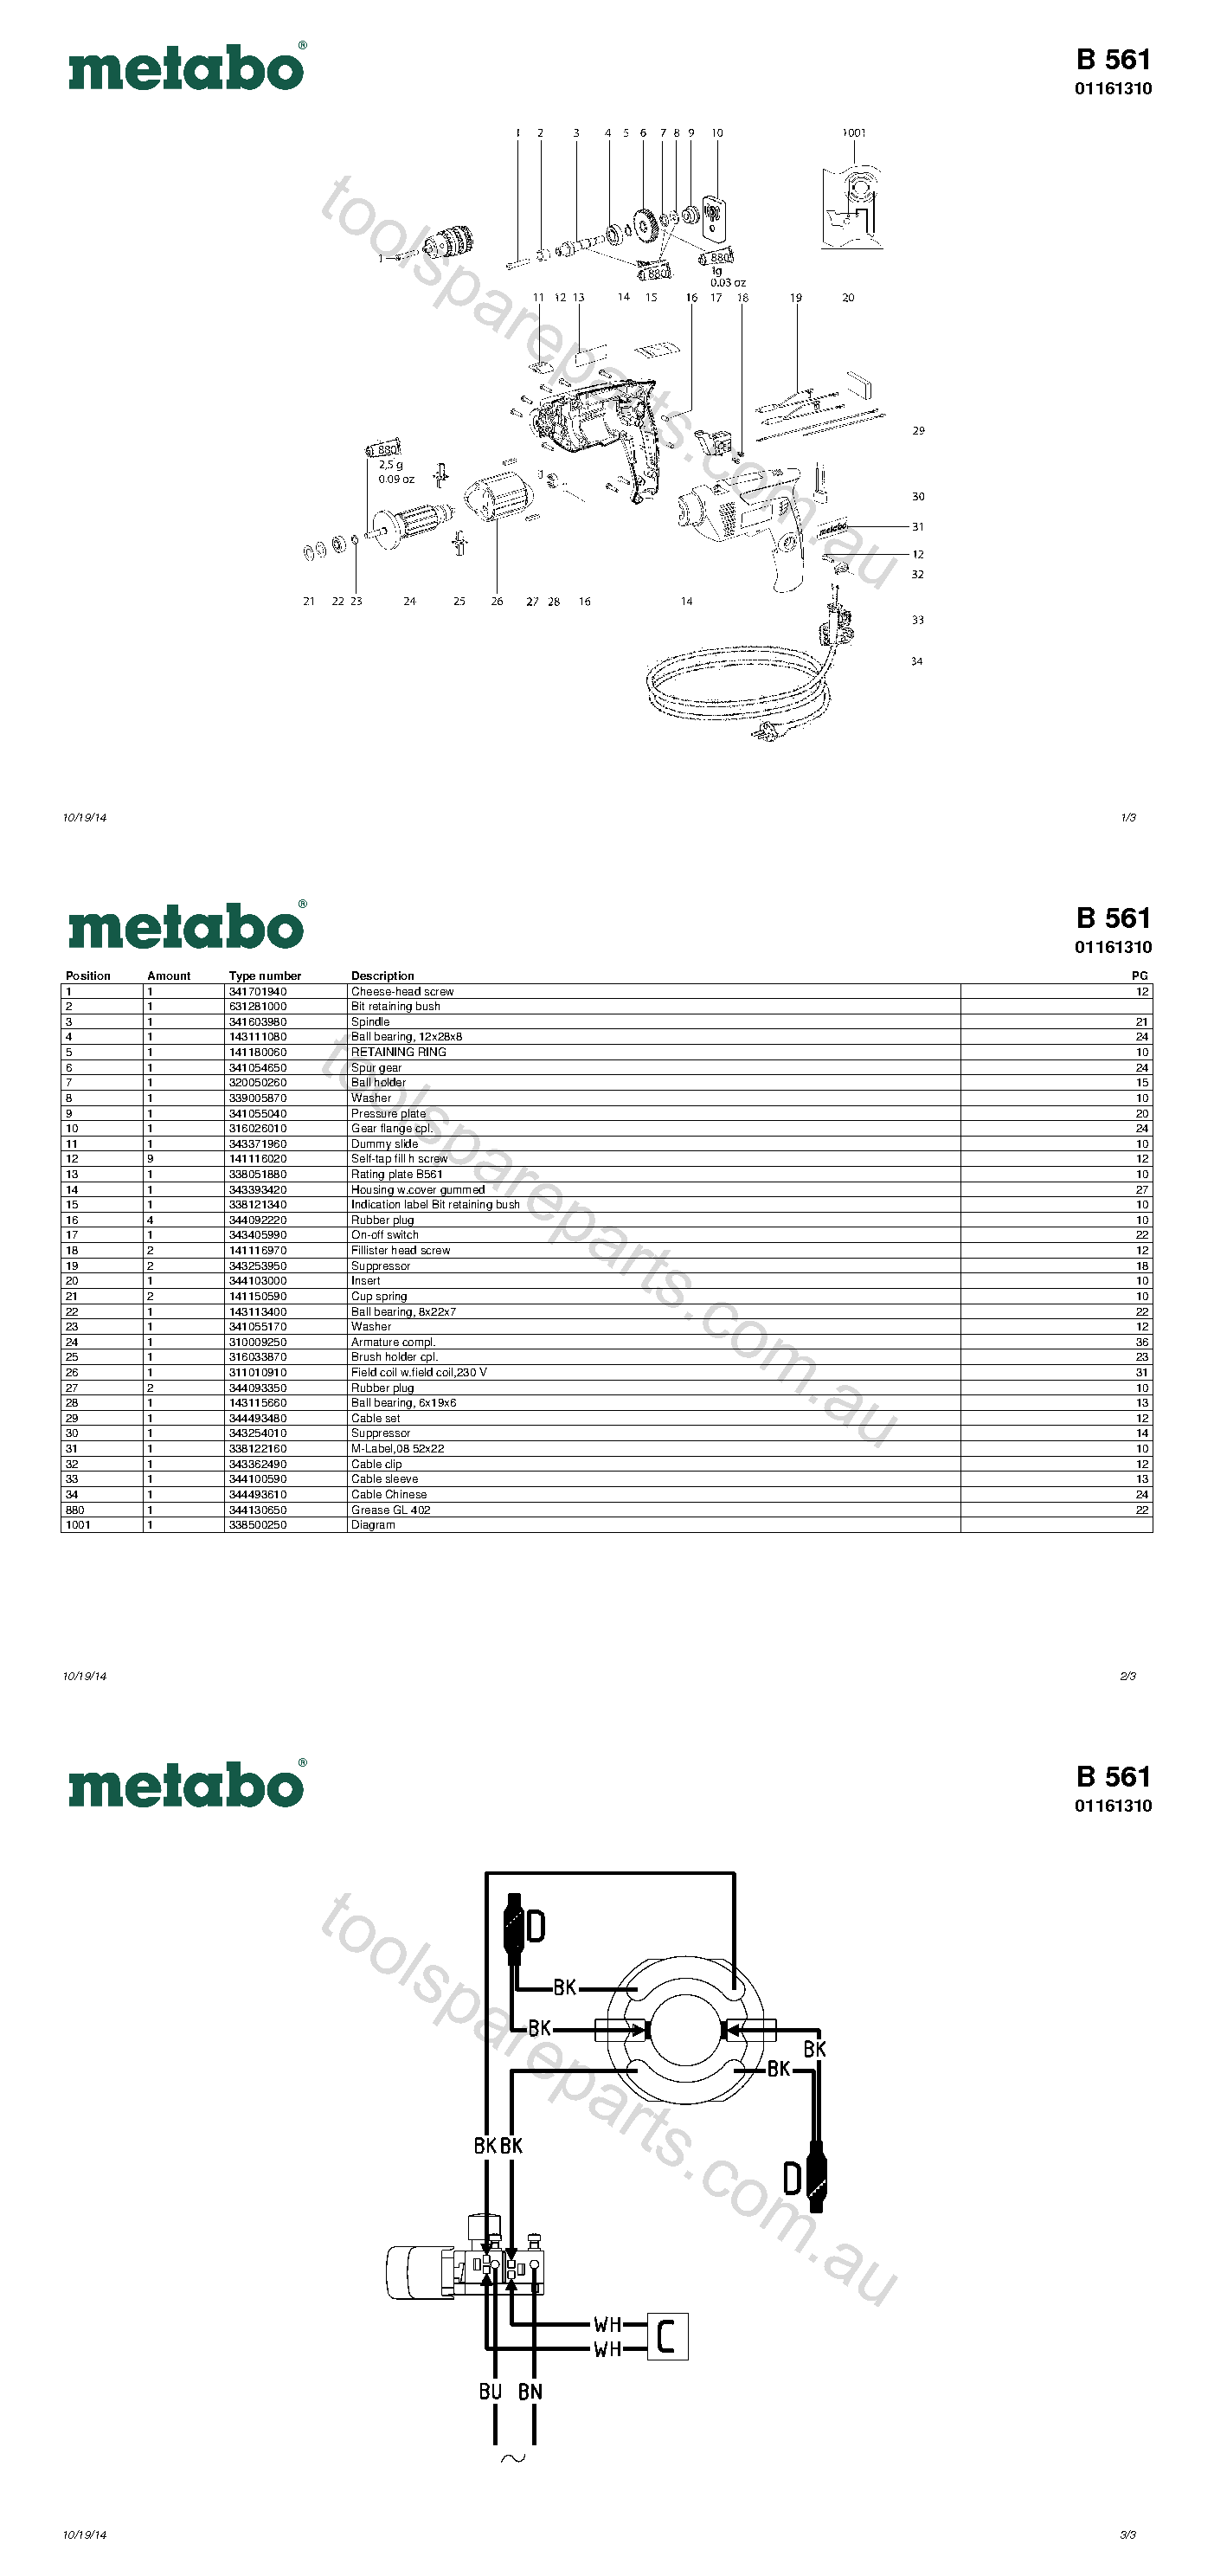 Metabo B 561 01161310  Diagram 1